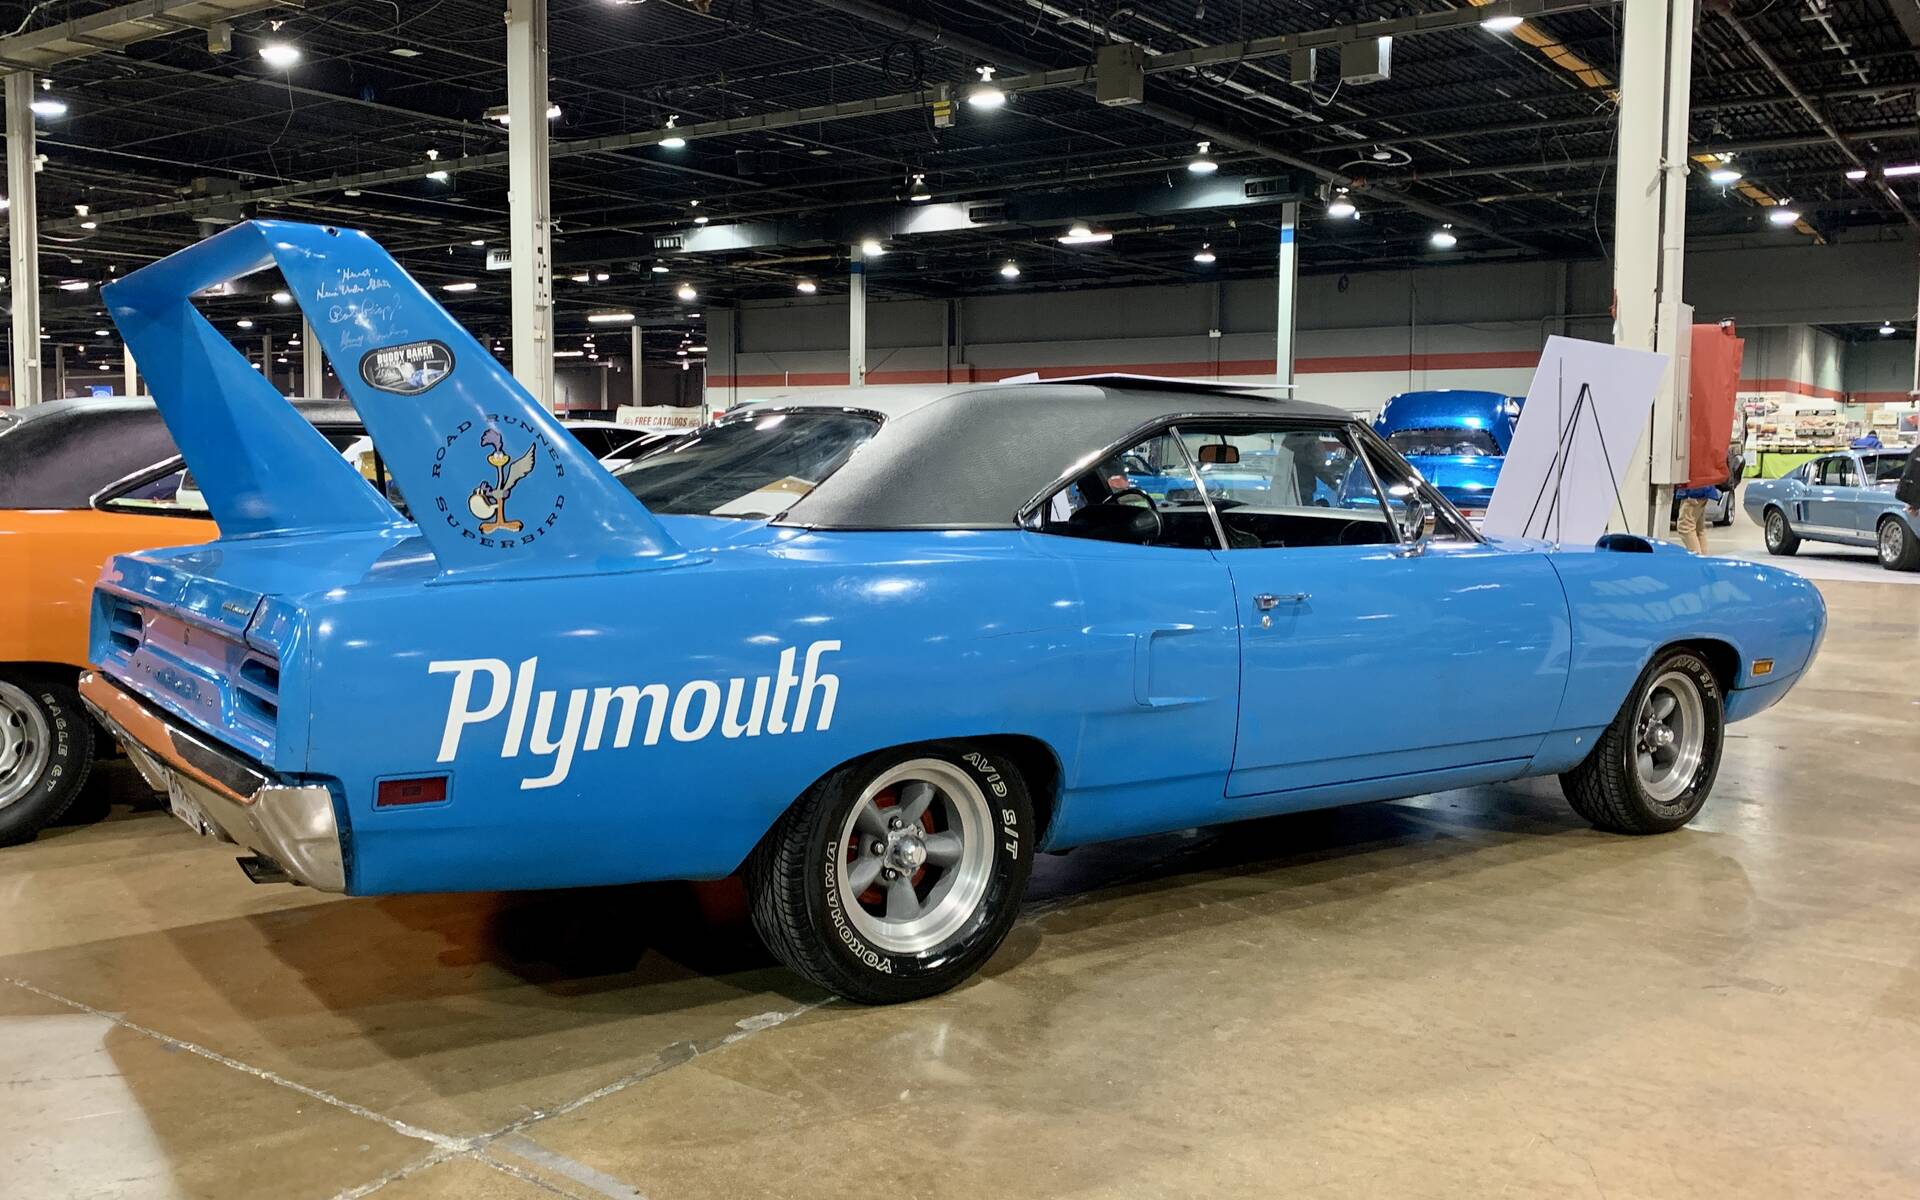 Plusieurs dizaines de Plymouth Superbird et Dodge Charger Daytona réunies à Chicago 551466-plusieurs-dizaines-de-plymouth-superbird-et-dodge-charger-daytona-reunies-a-chicago